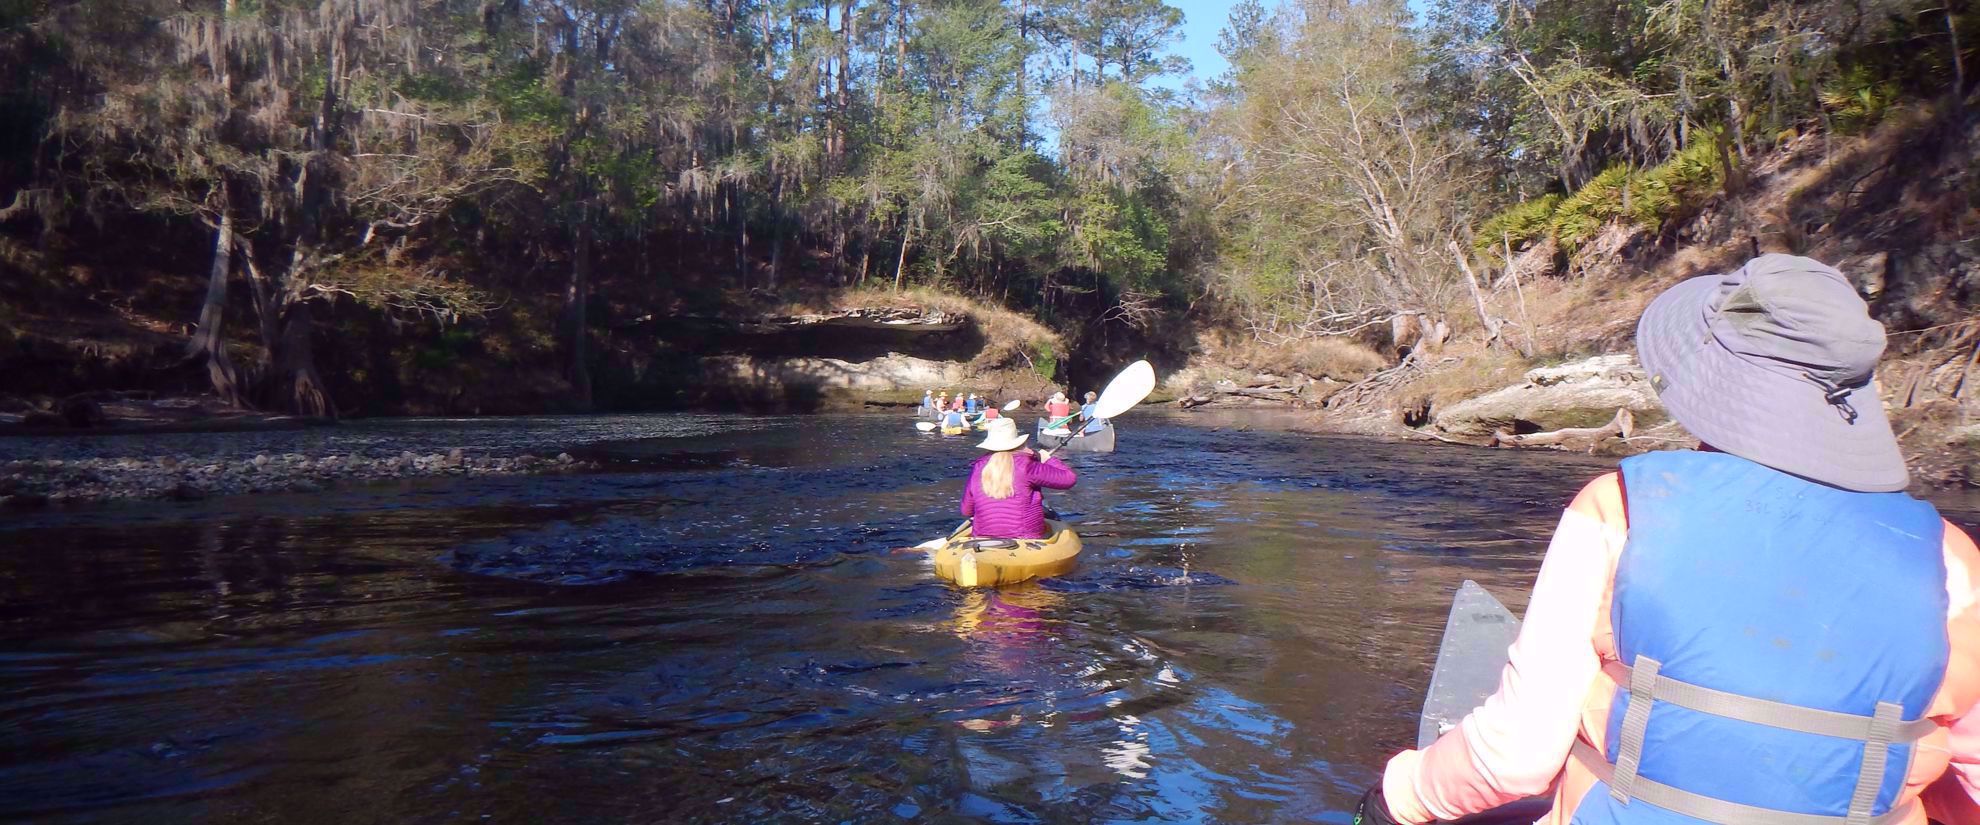 kayaking suwannee river all women's group travel florida